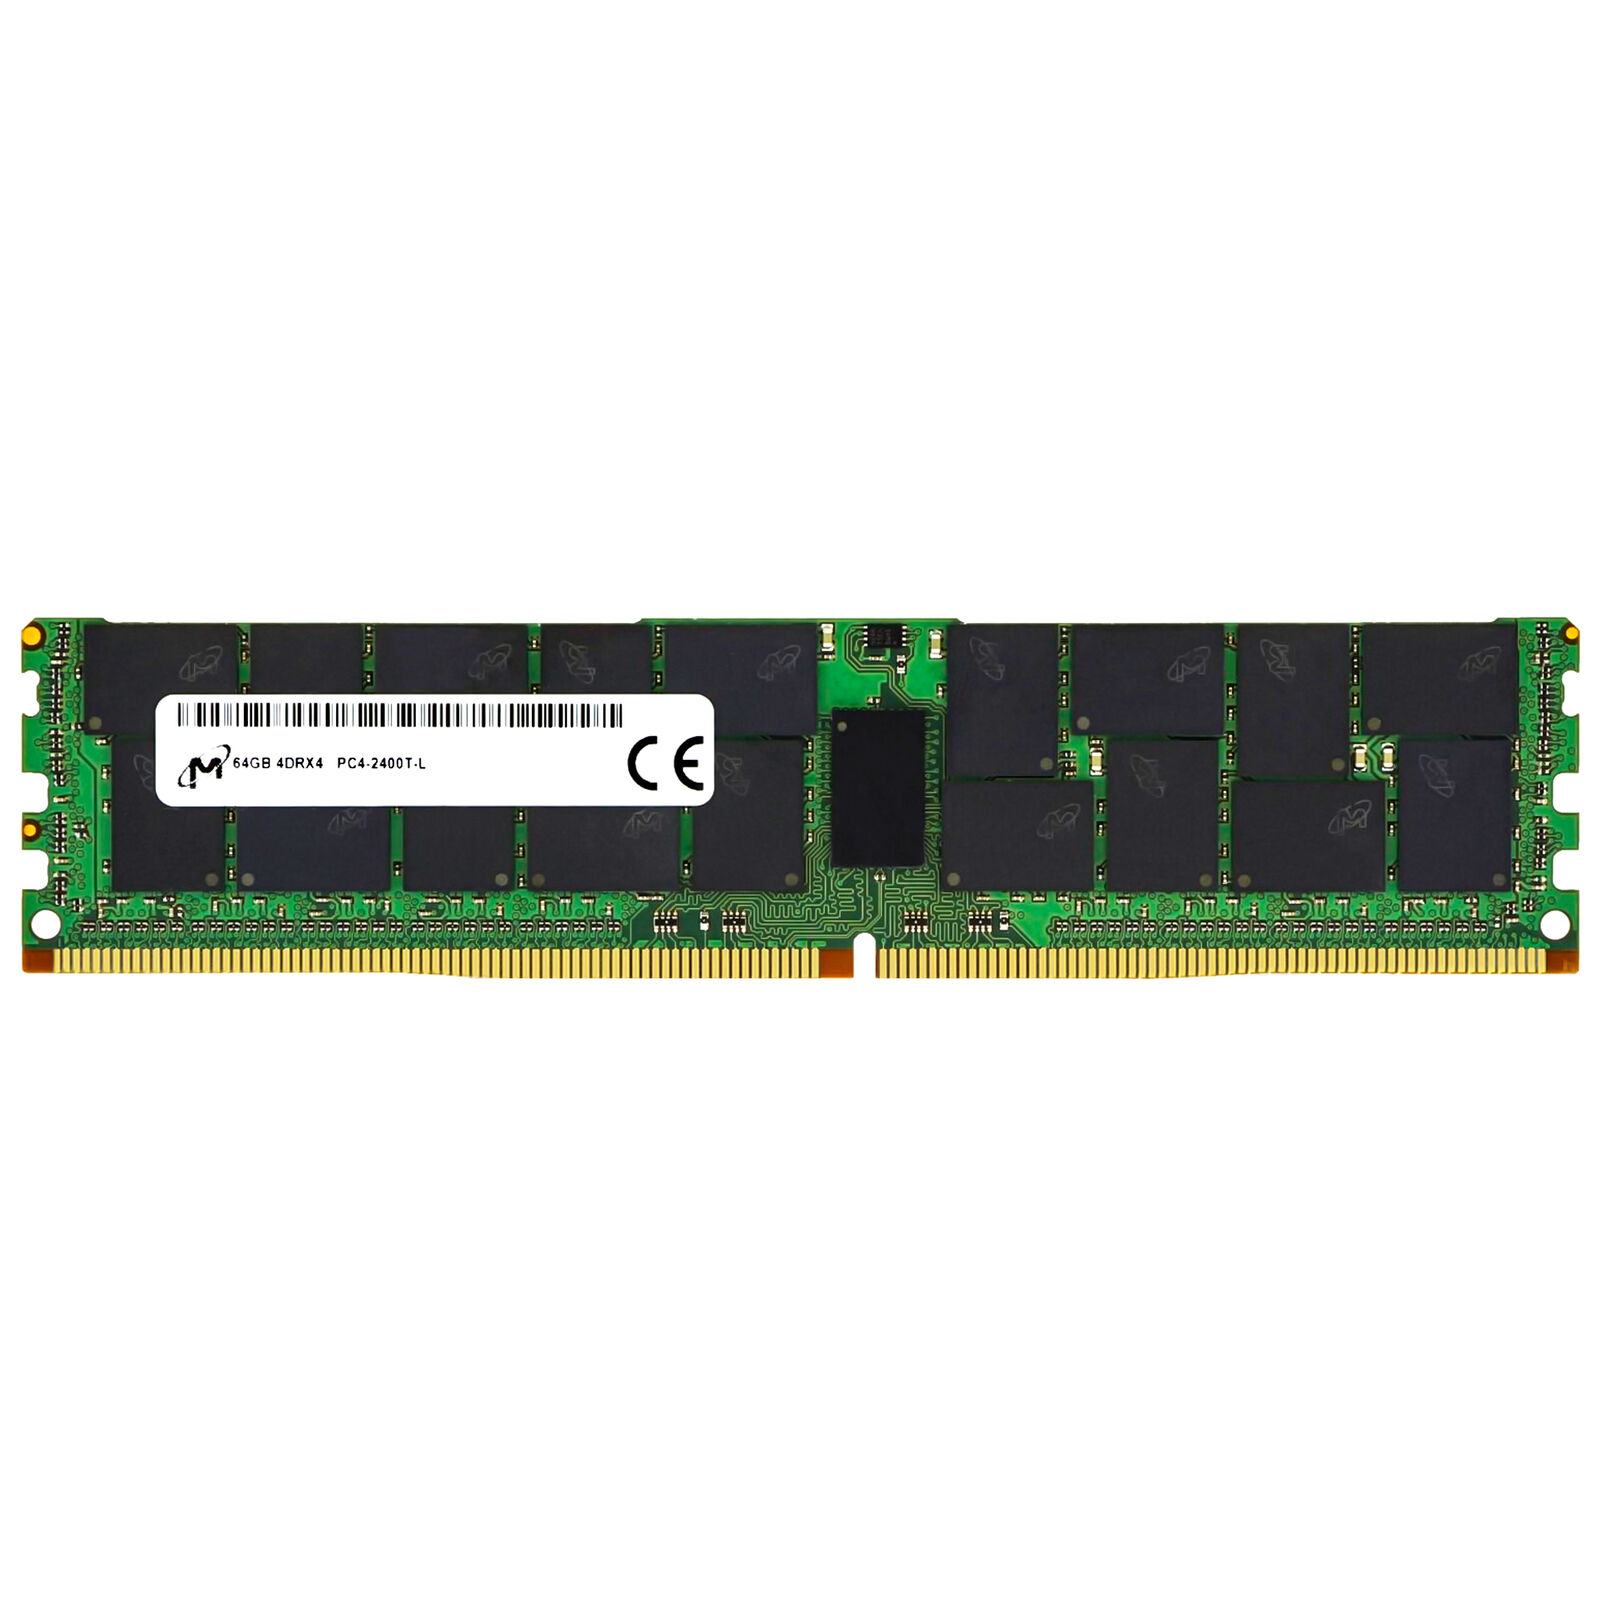 Micron 64GB 4DRx4 PC4-2400T LRDIMM DDR4-19200 ECC Load Reduced Server Memory RAM